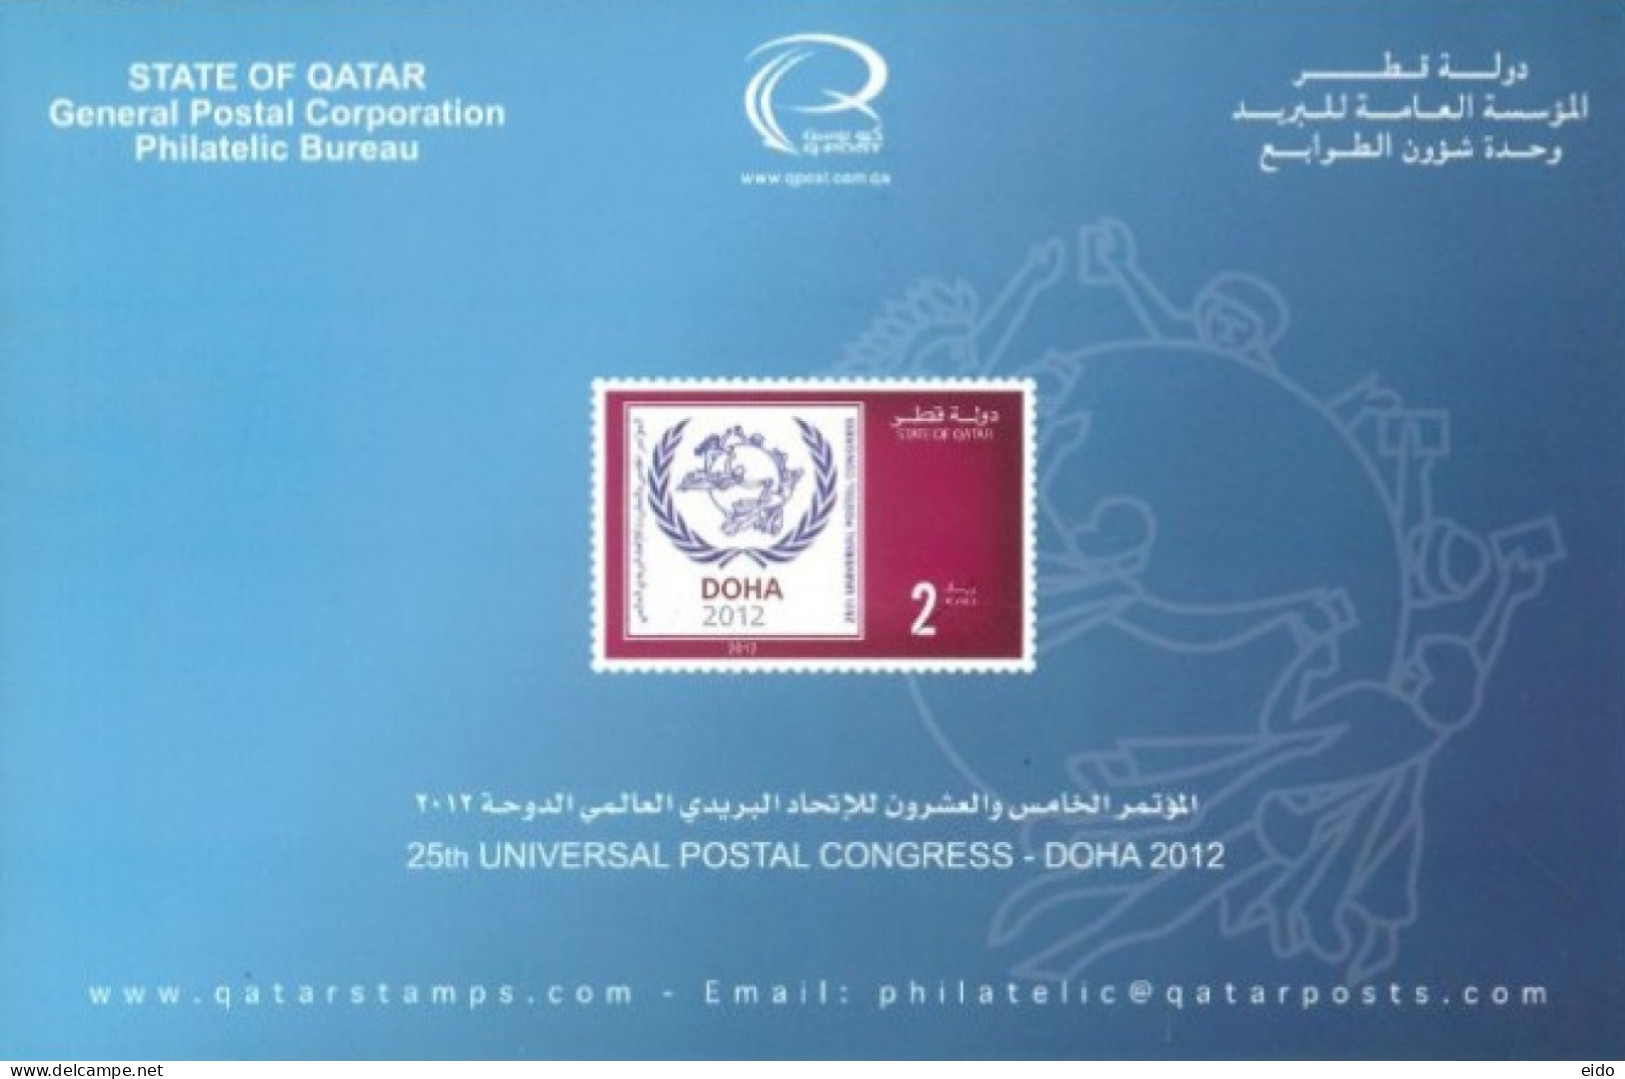 QATAR  -  2012, POSTAL STAMP BULETIN OF 25th UNIVERSAL POSTAL CONGRESS - DOHA  AND TECHNICAL DETAILS. - Qatar